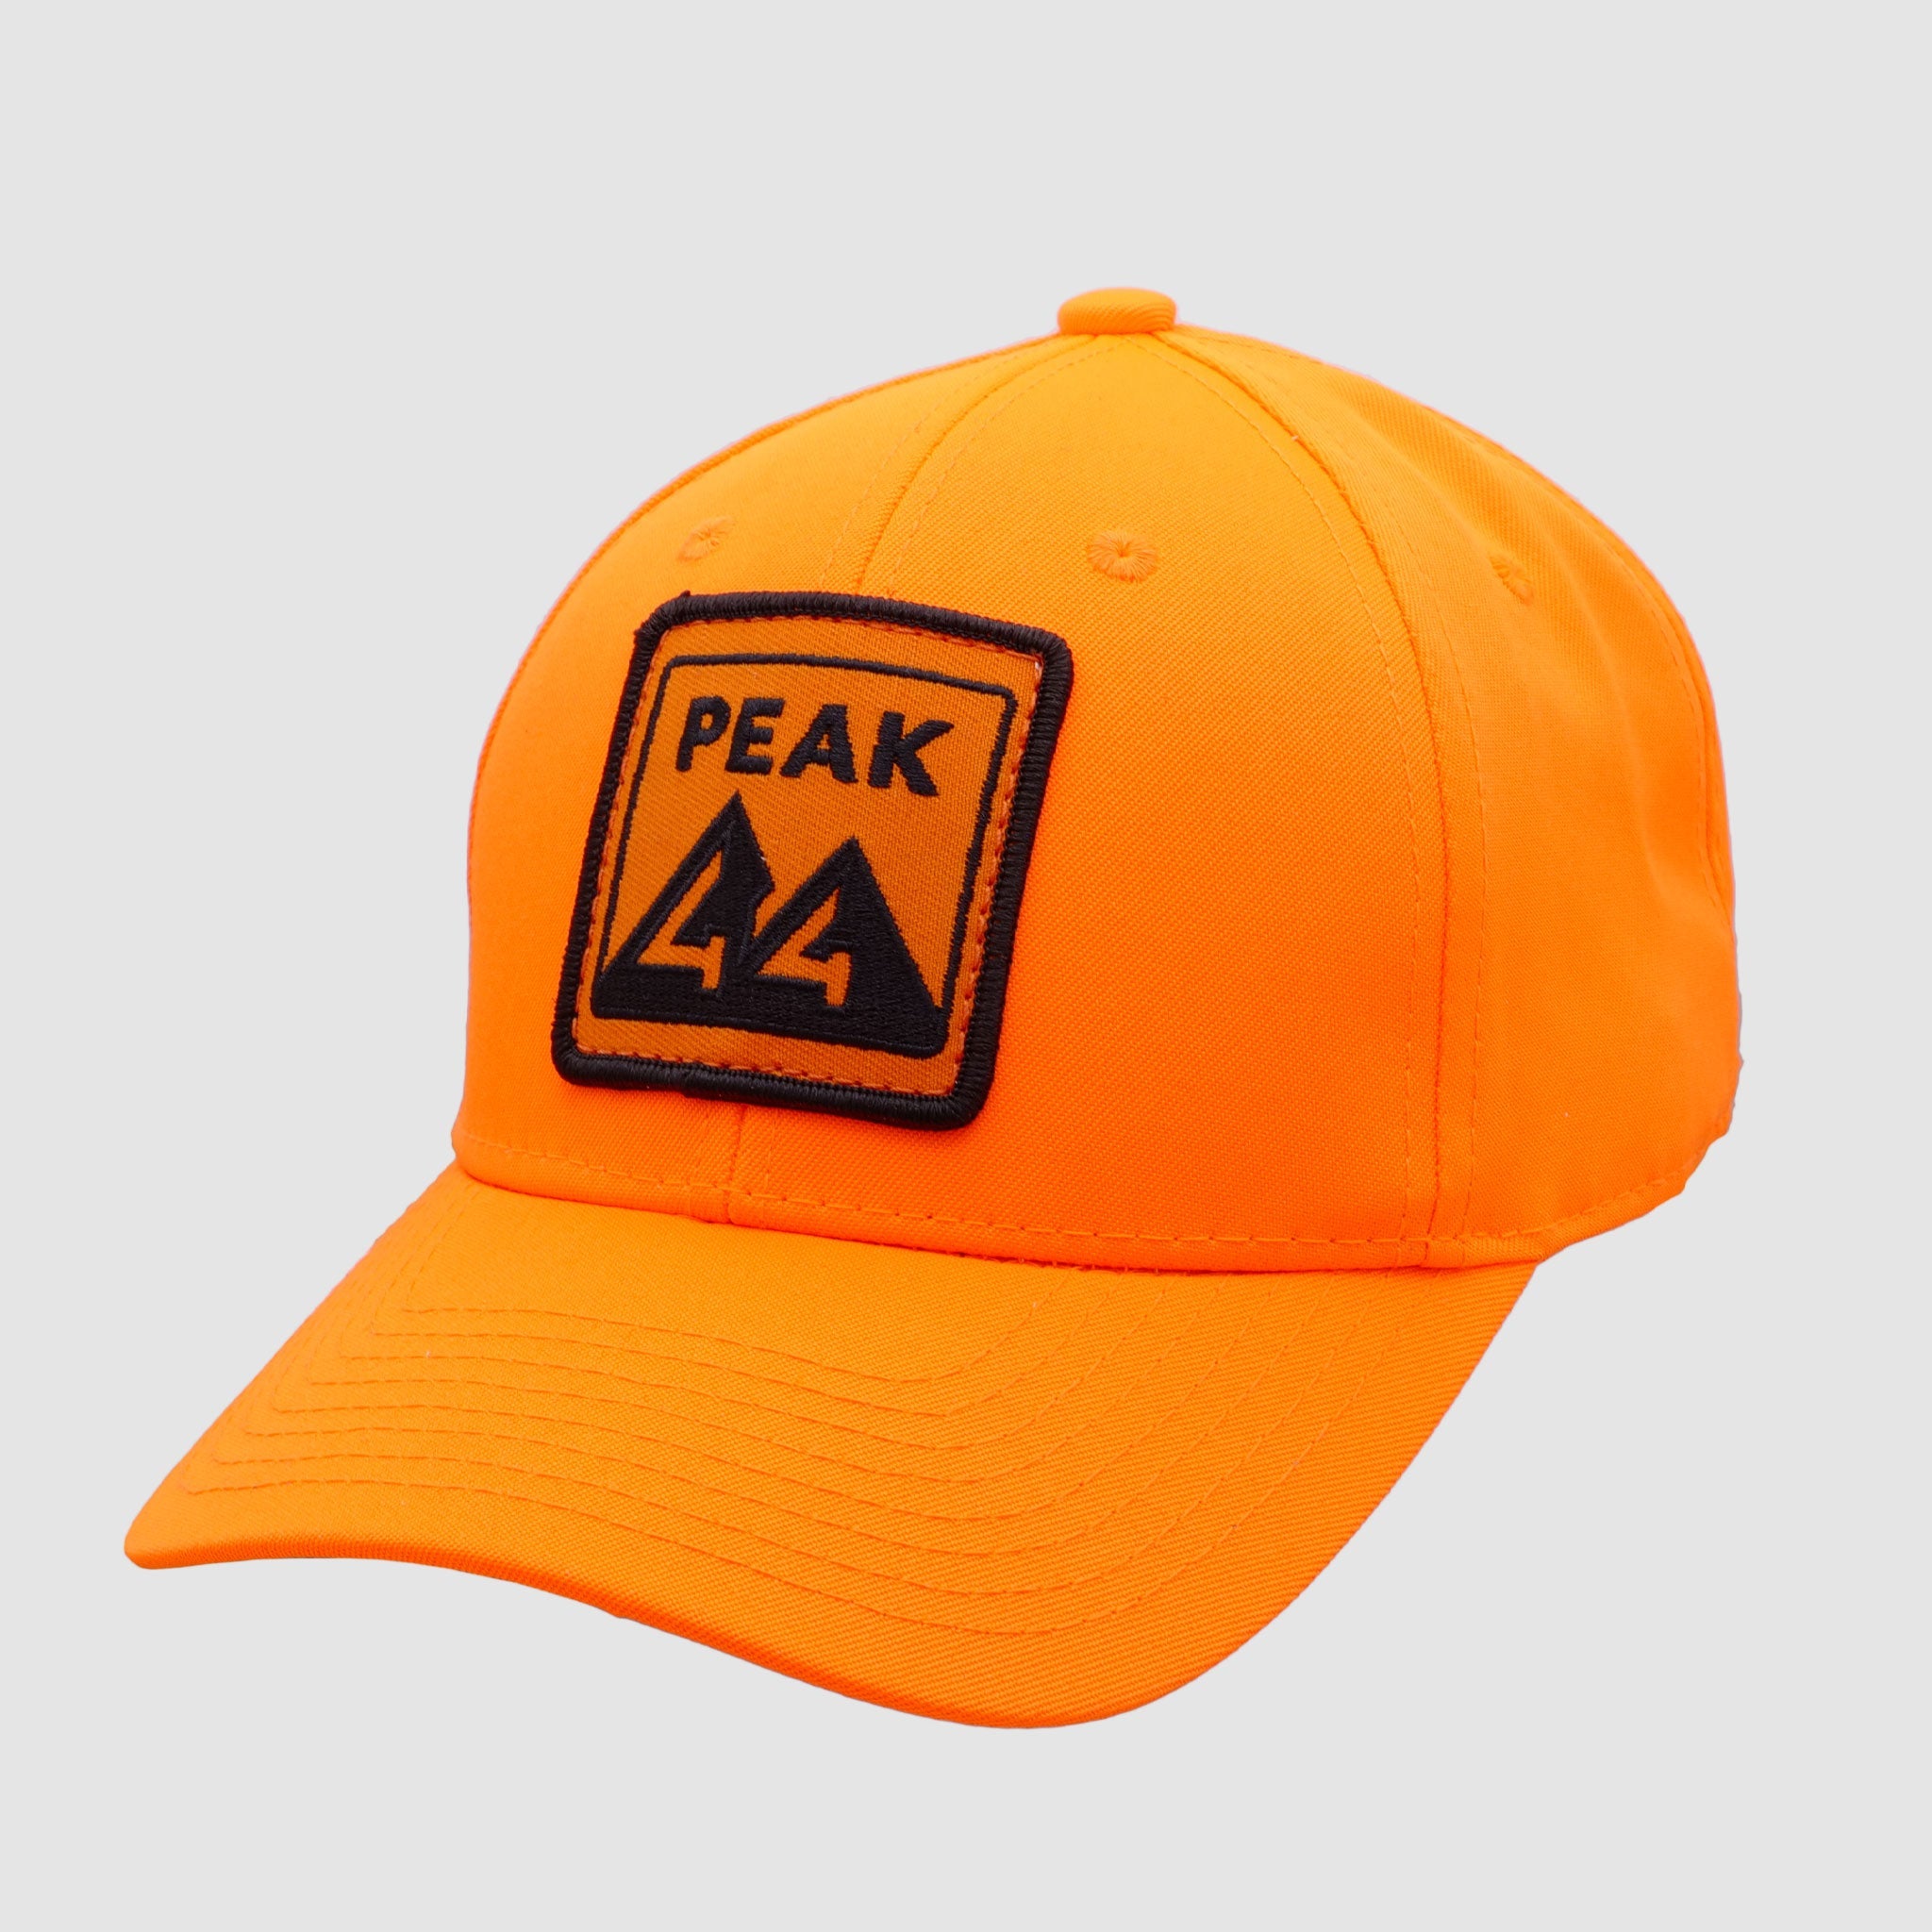 Peak 44 Blaze Orange Hat